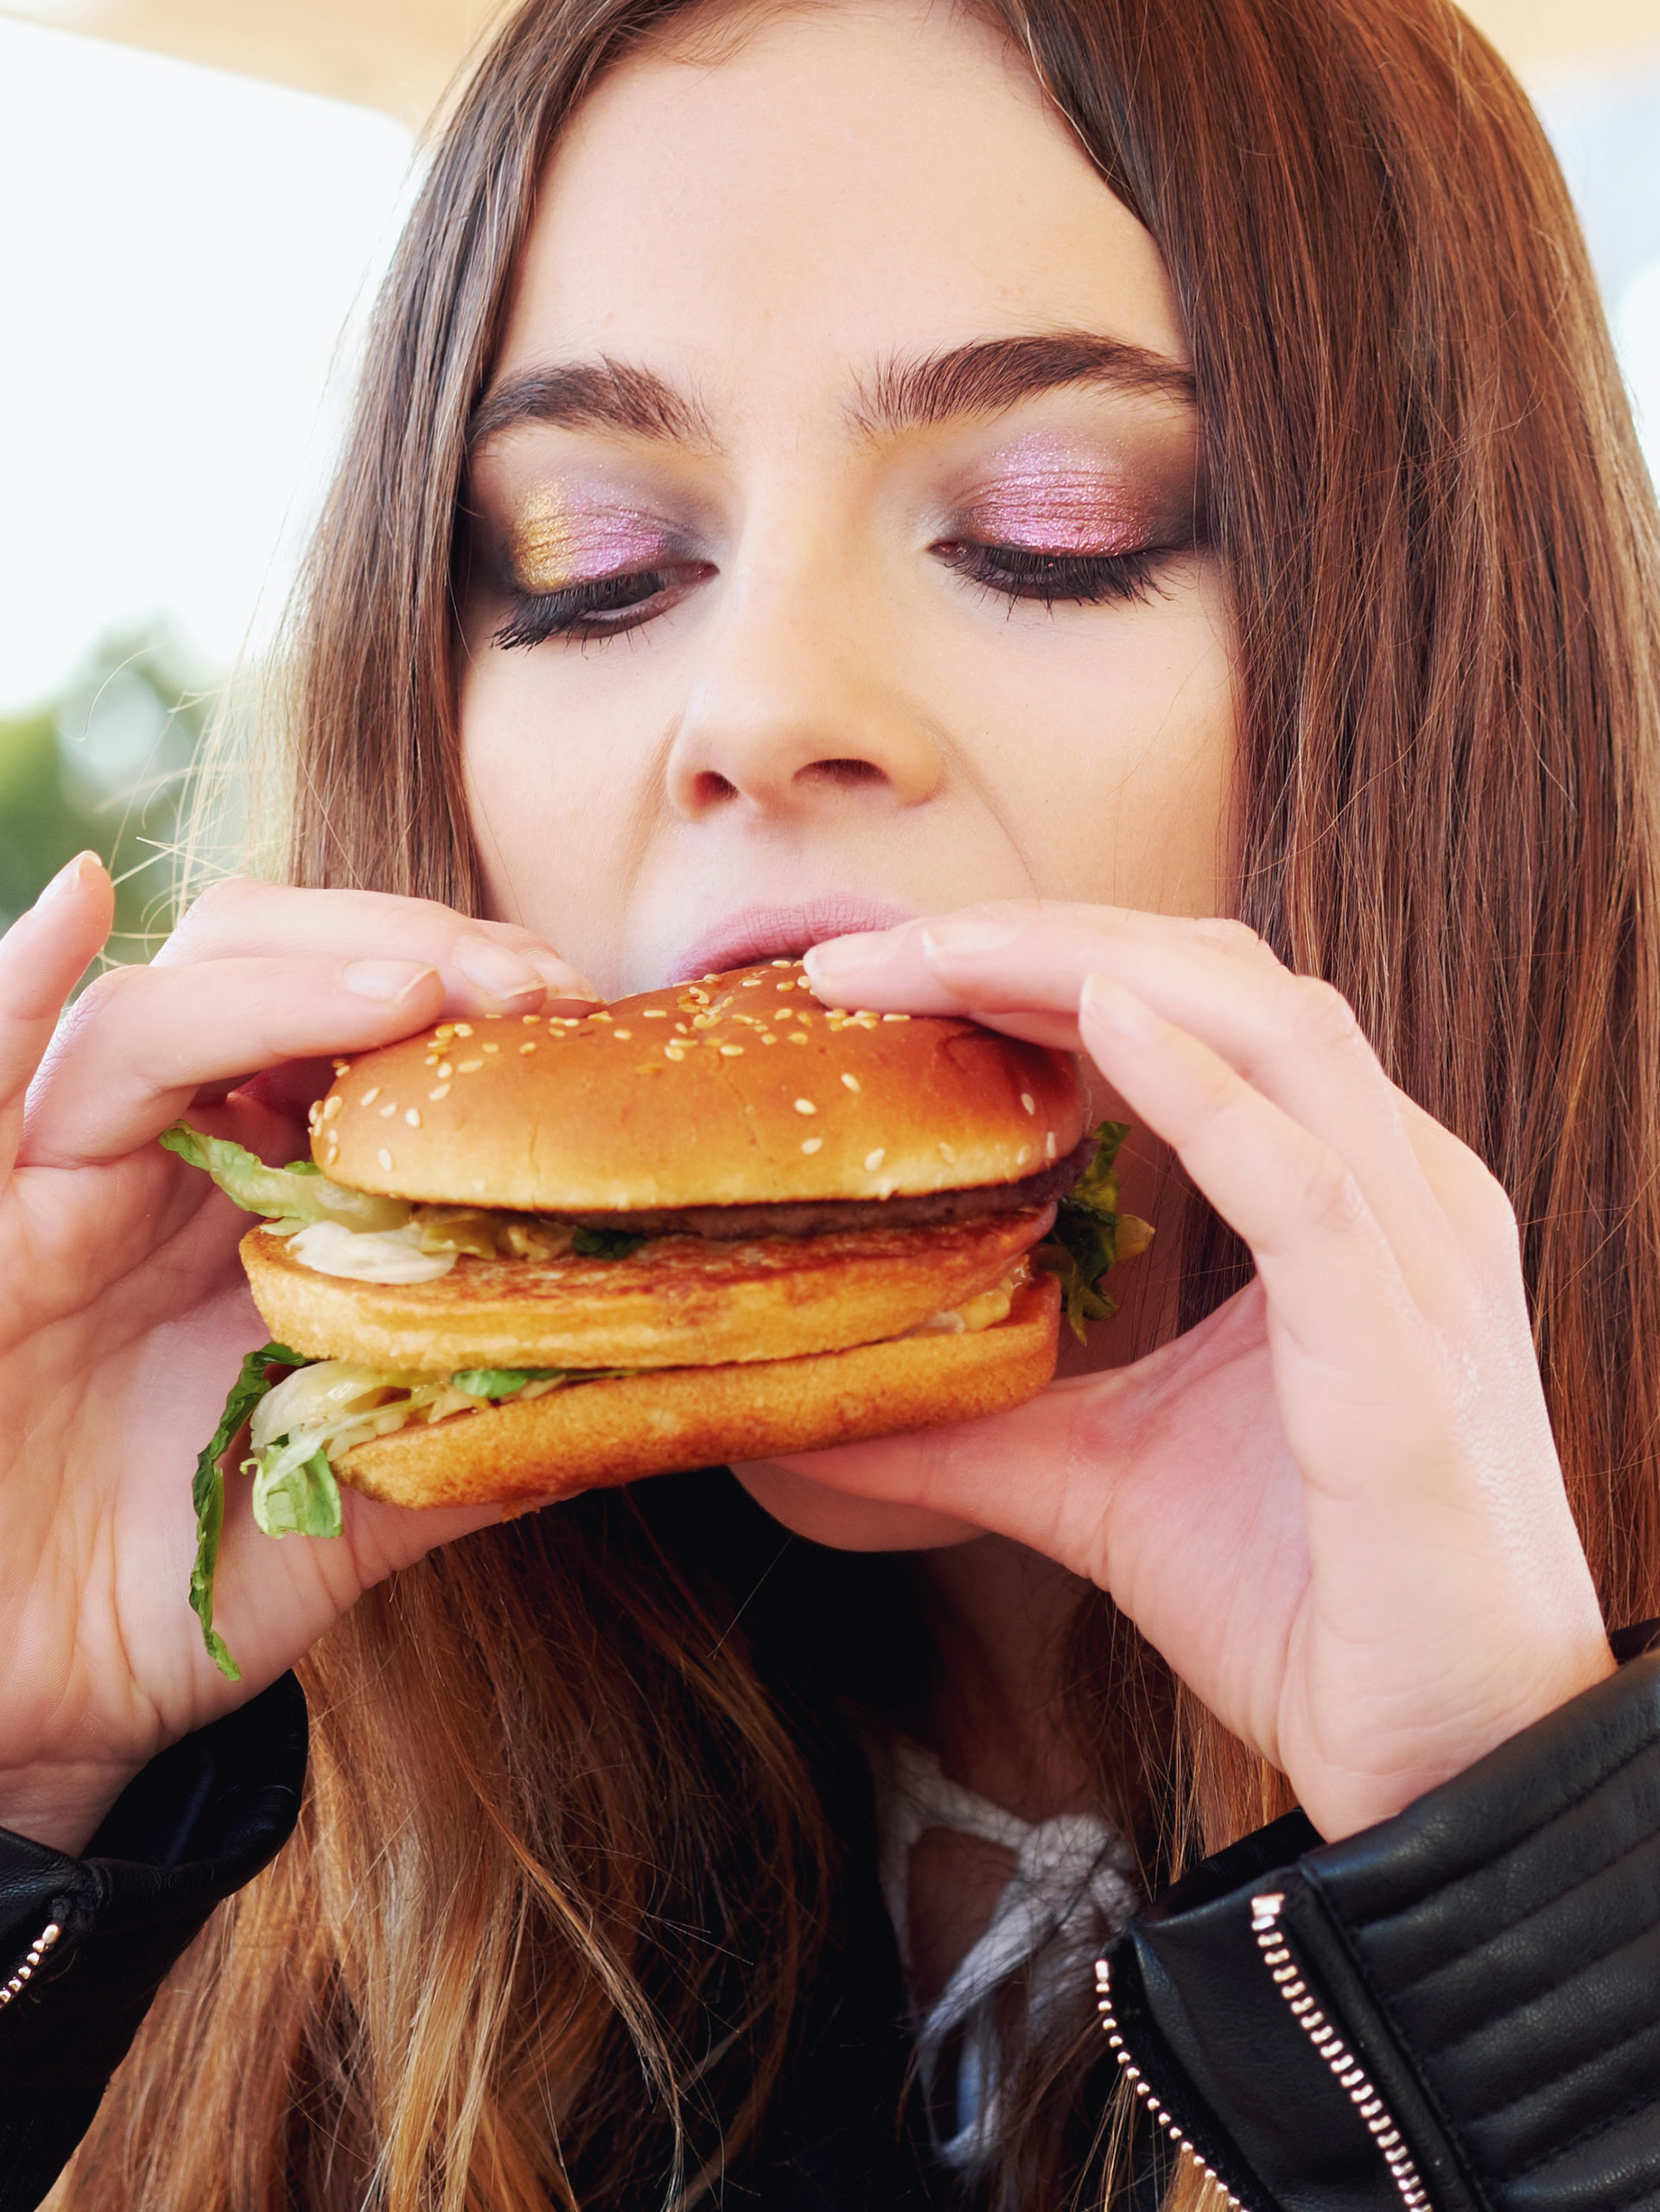 portrait for teenage girl eating a hamburger